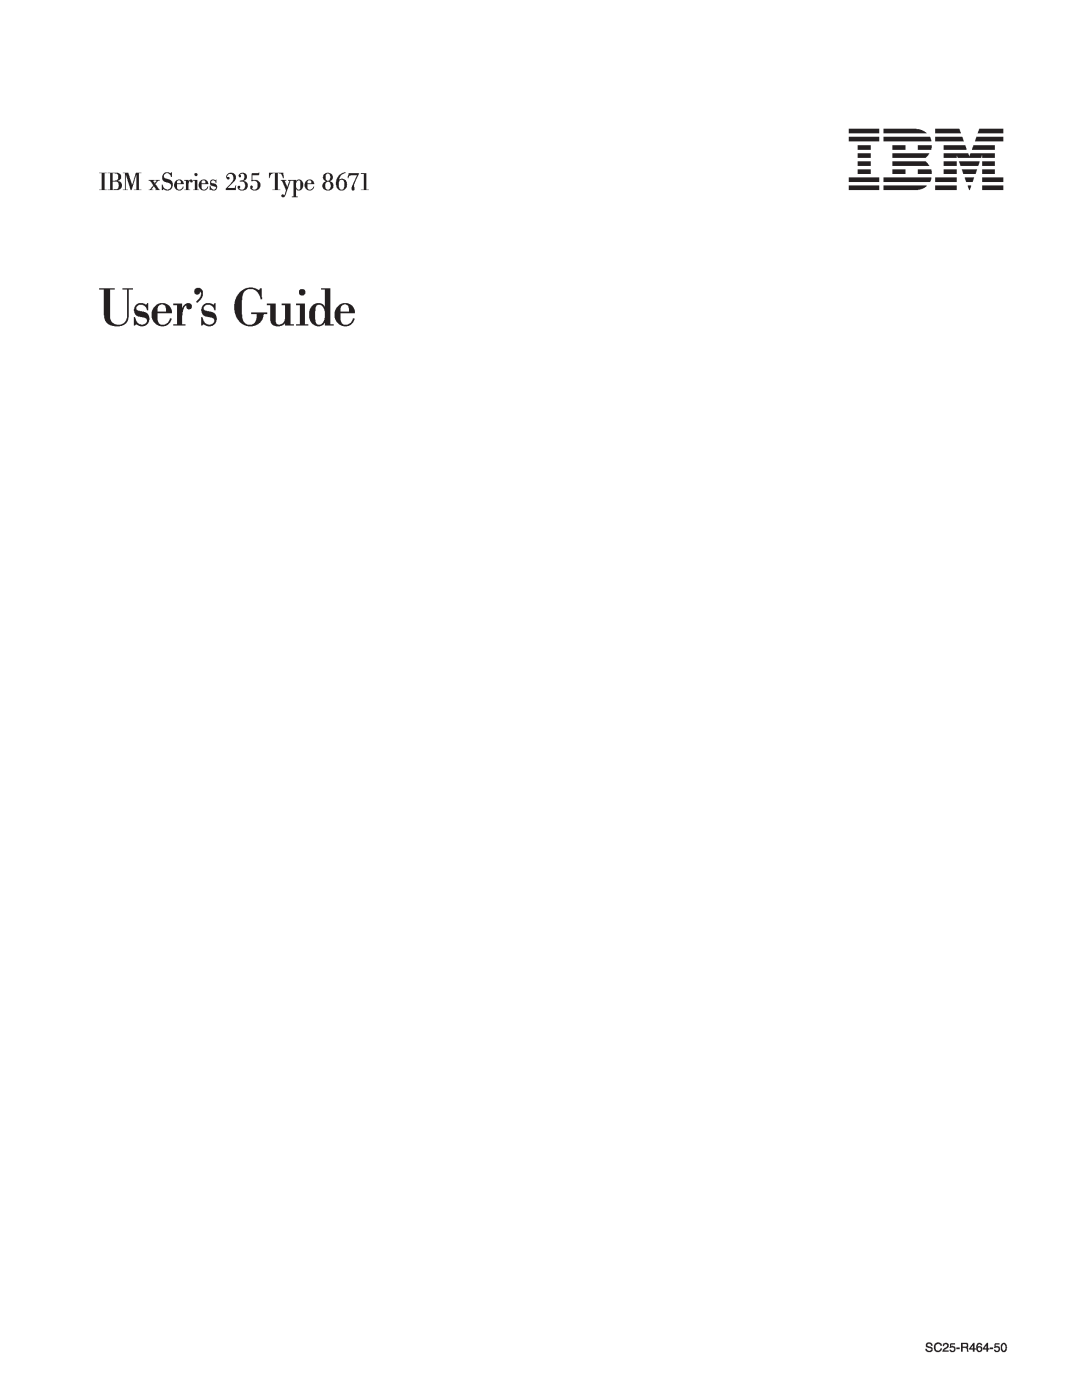 IBM manual User’s Guide, IBM xSeries 235 Type 